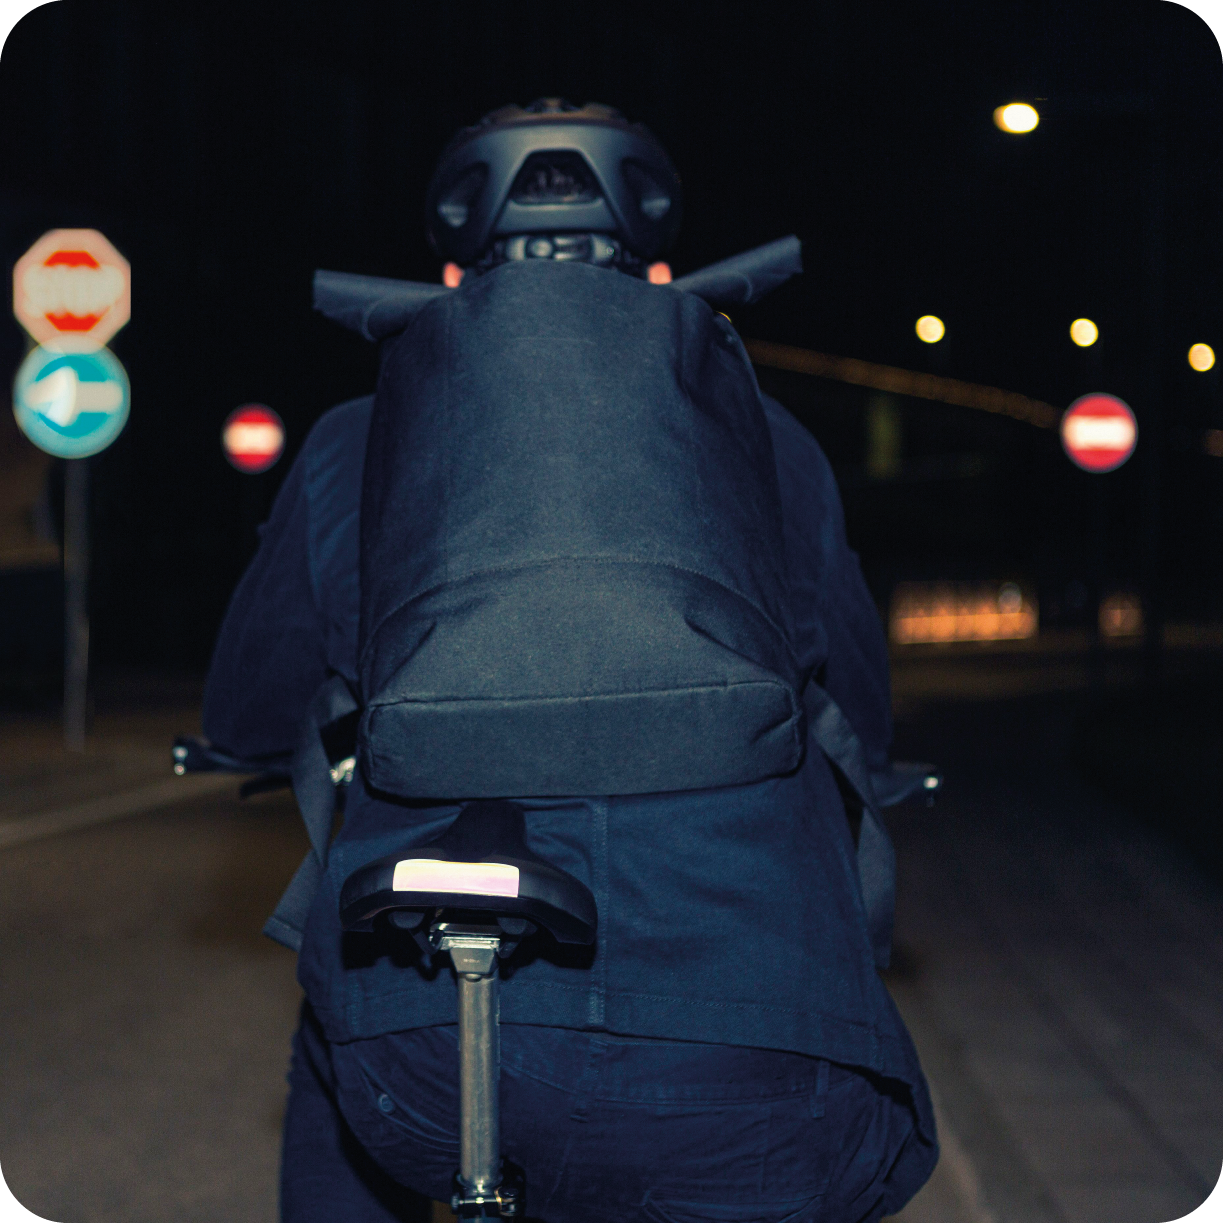 Dieci suggerimenti per la vostra sicurezza in bici